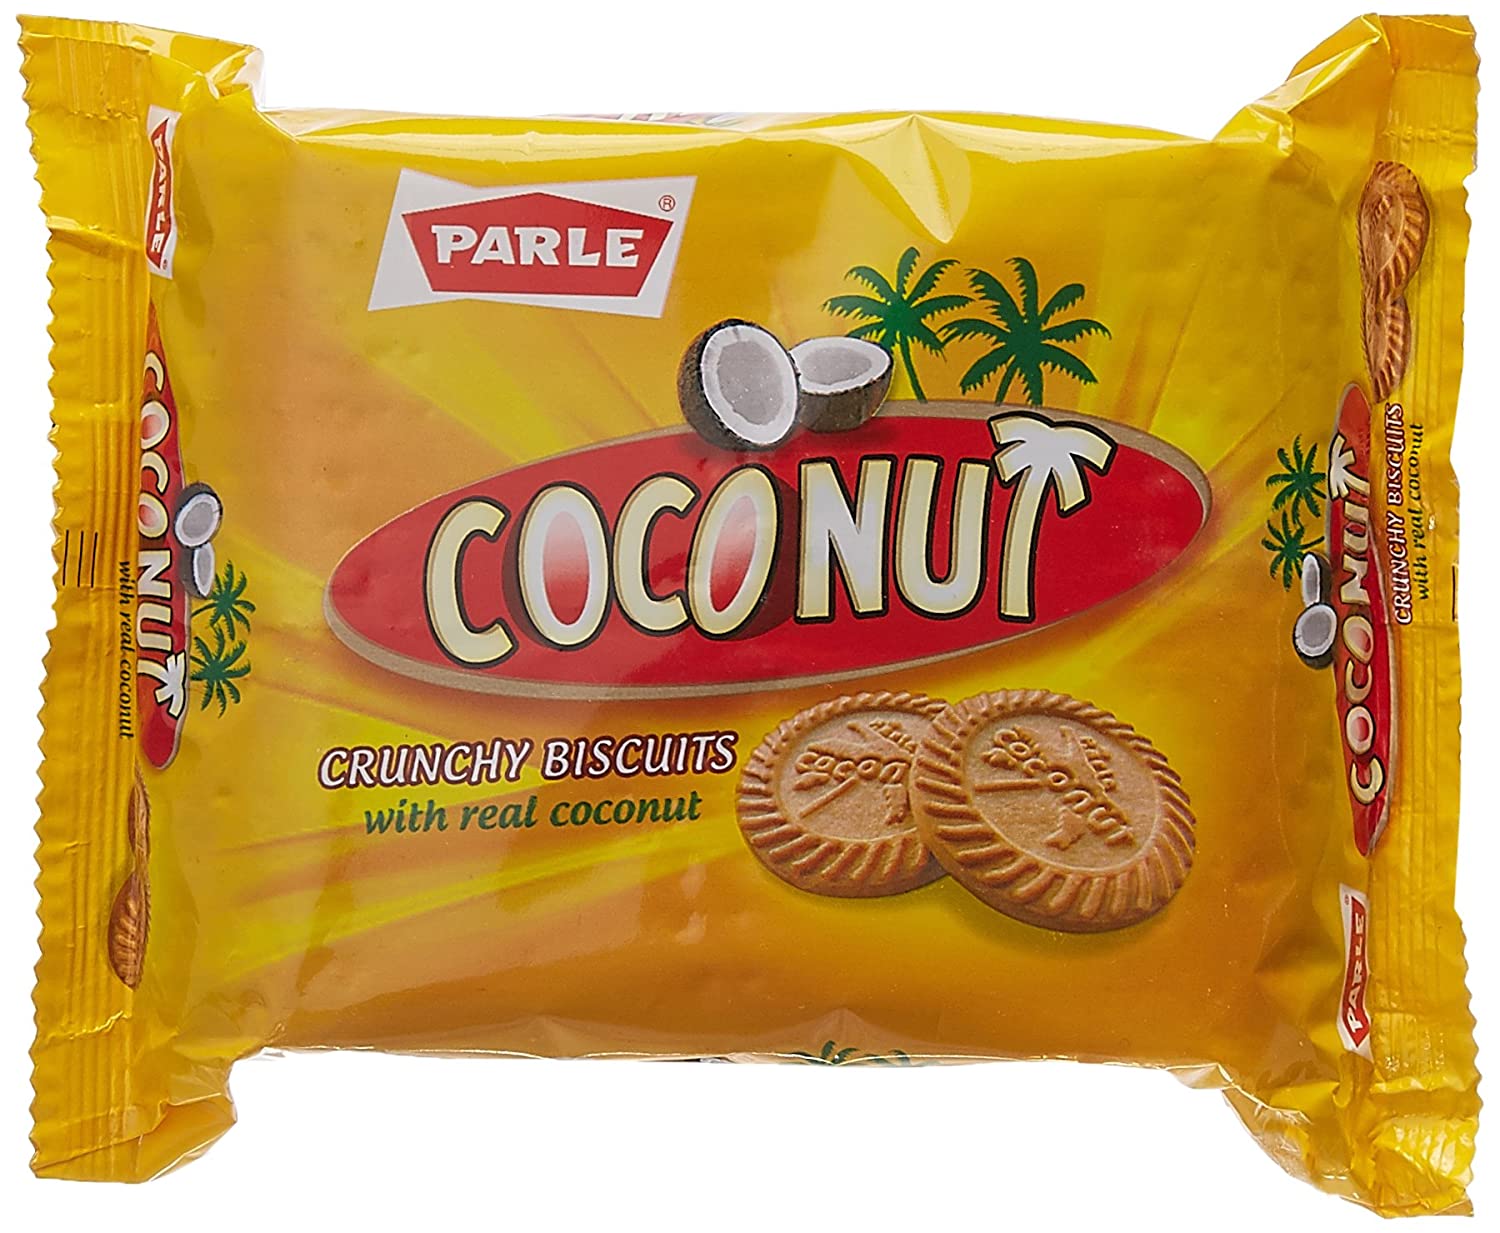 Parle Coconut Cookies, 80g